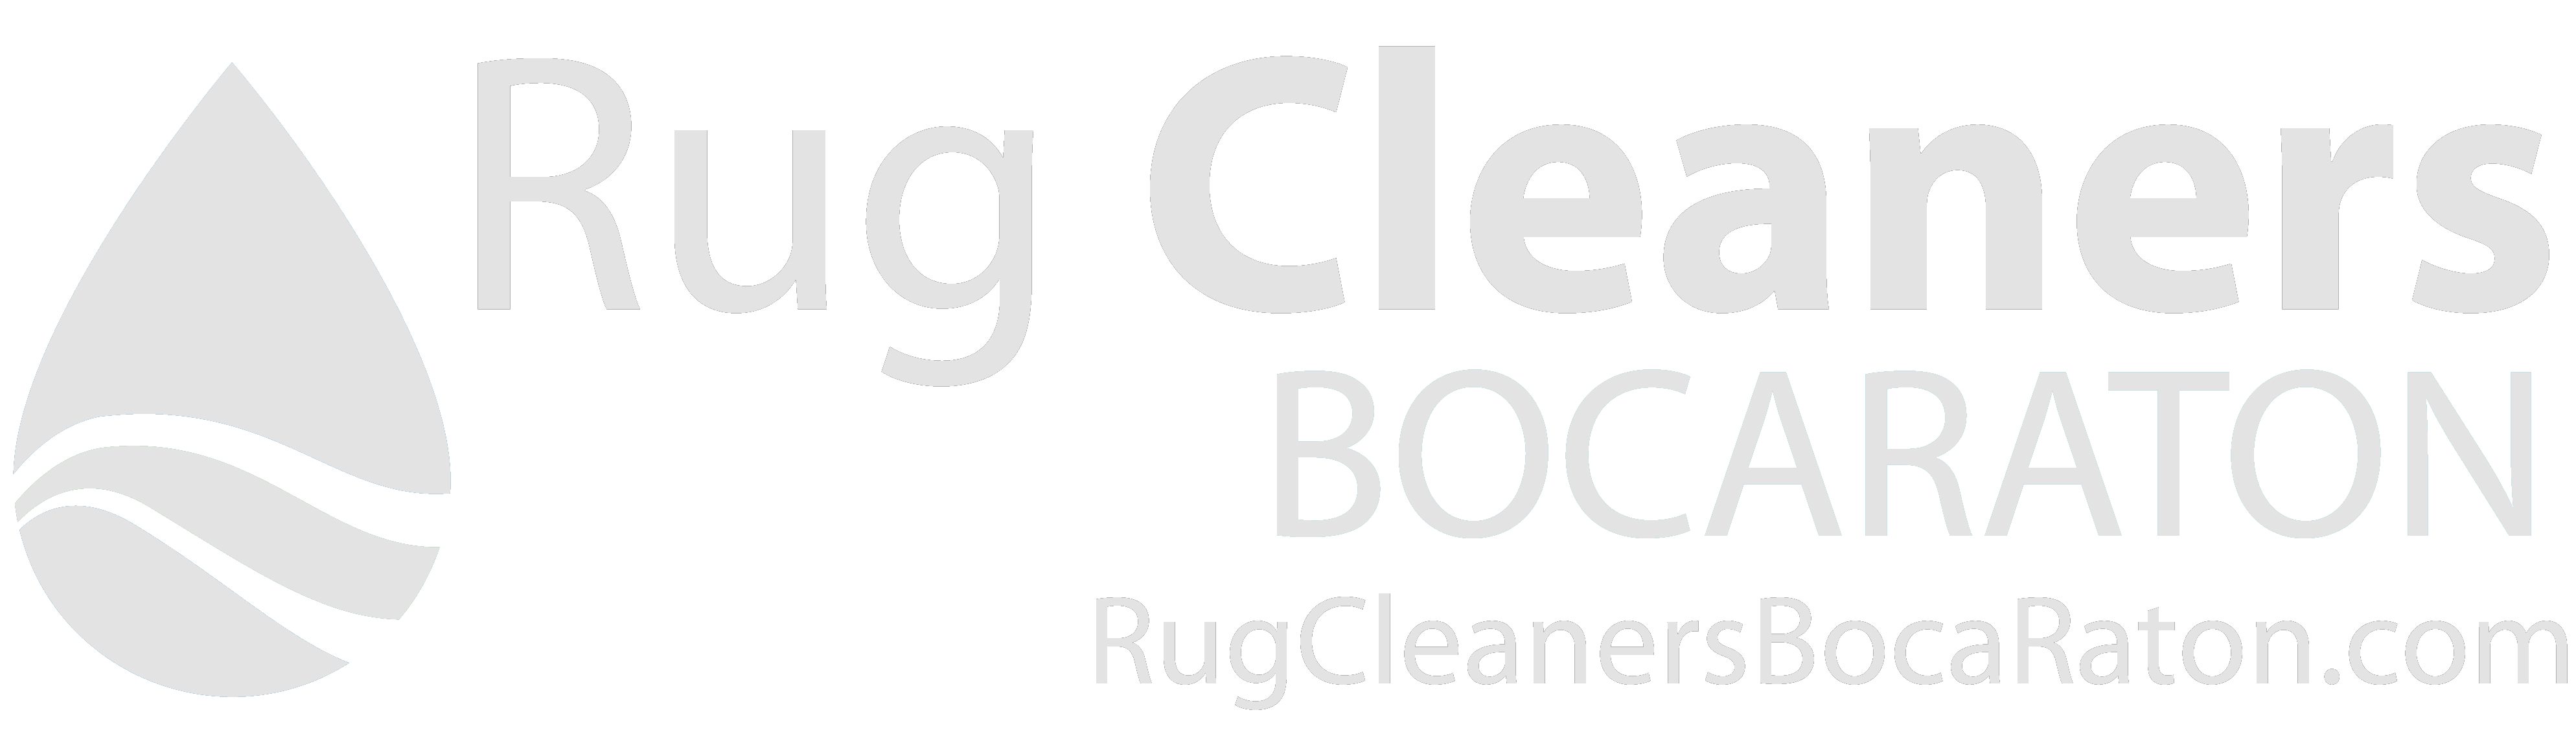 Rug Cleaners Boca Raton